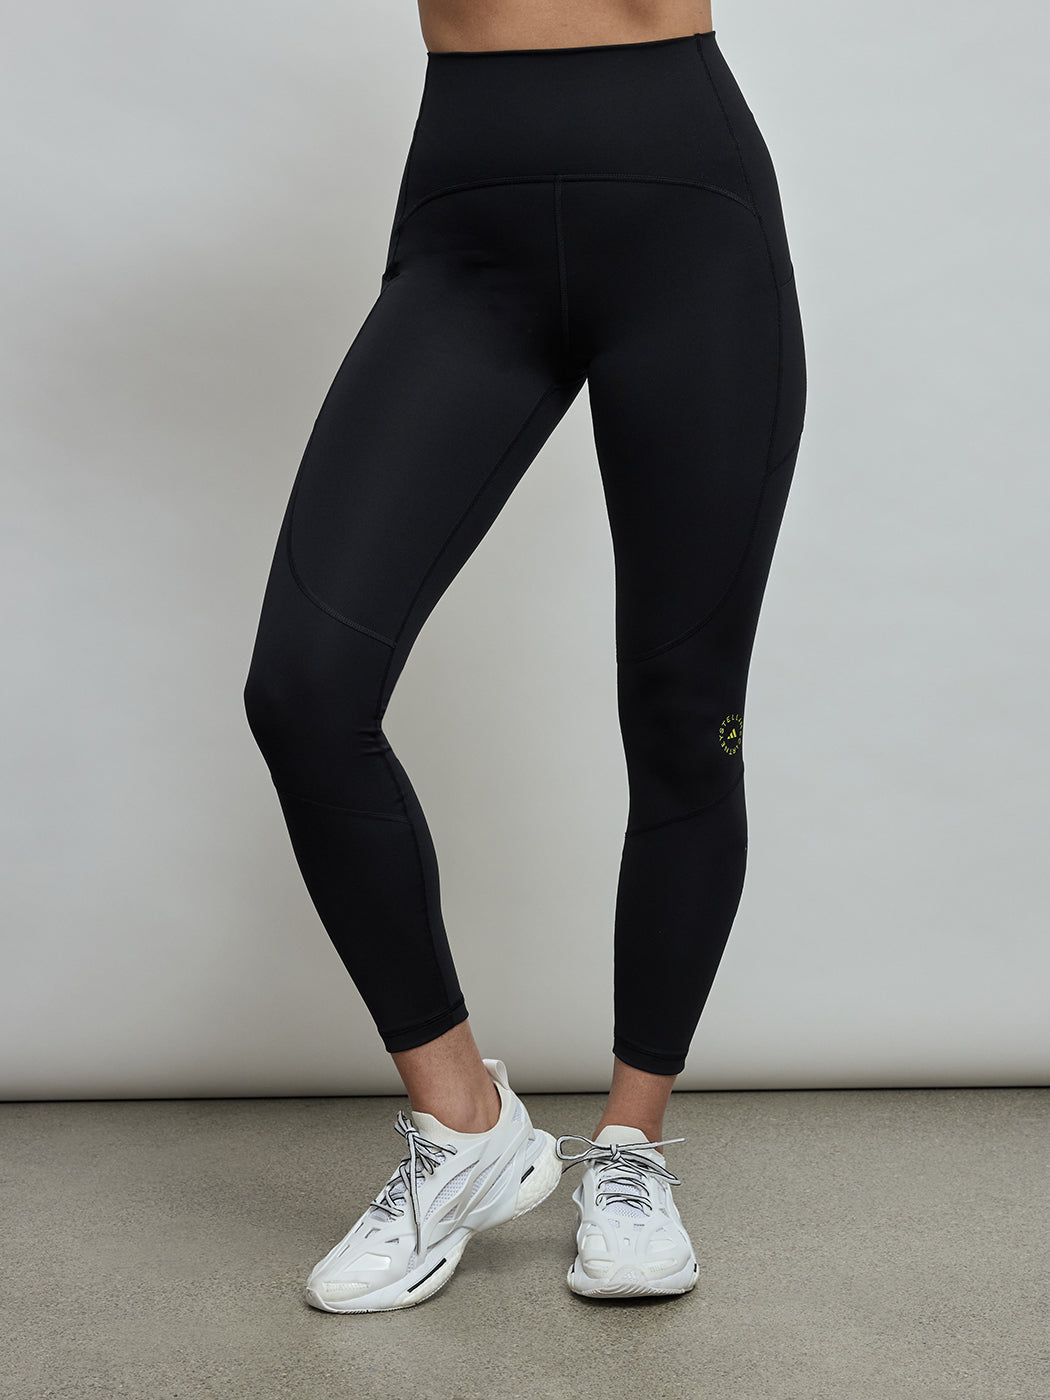 Adidas By Stella Mccartney Truepurpose Training 7/8 Tight - Black